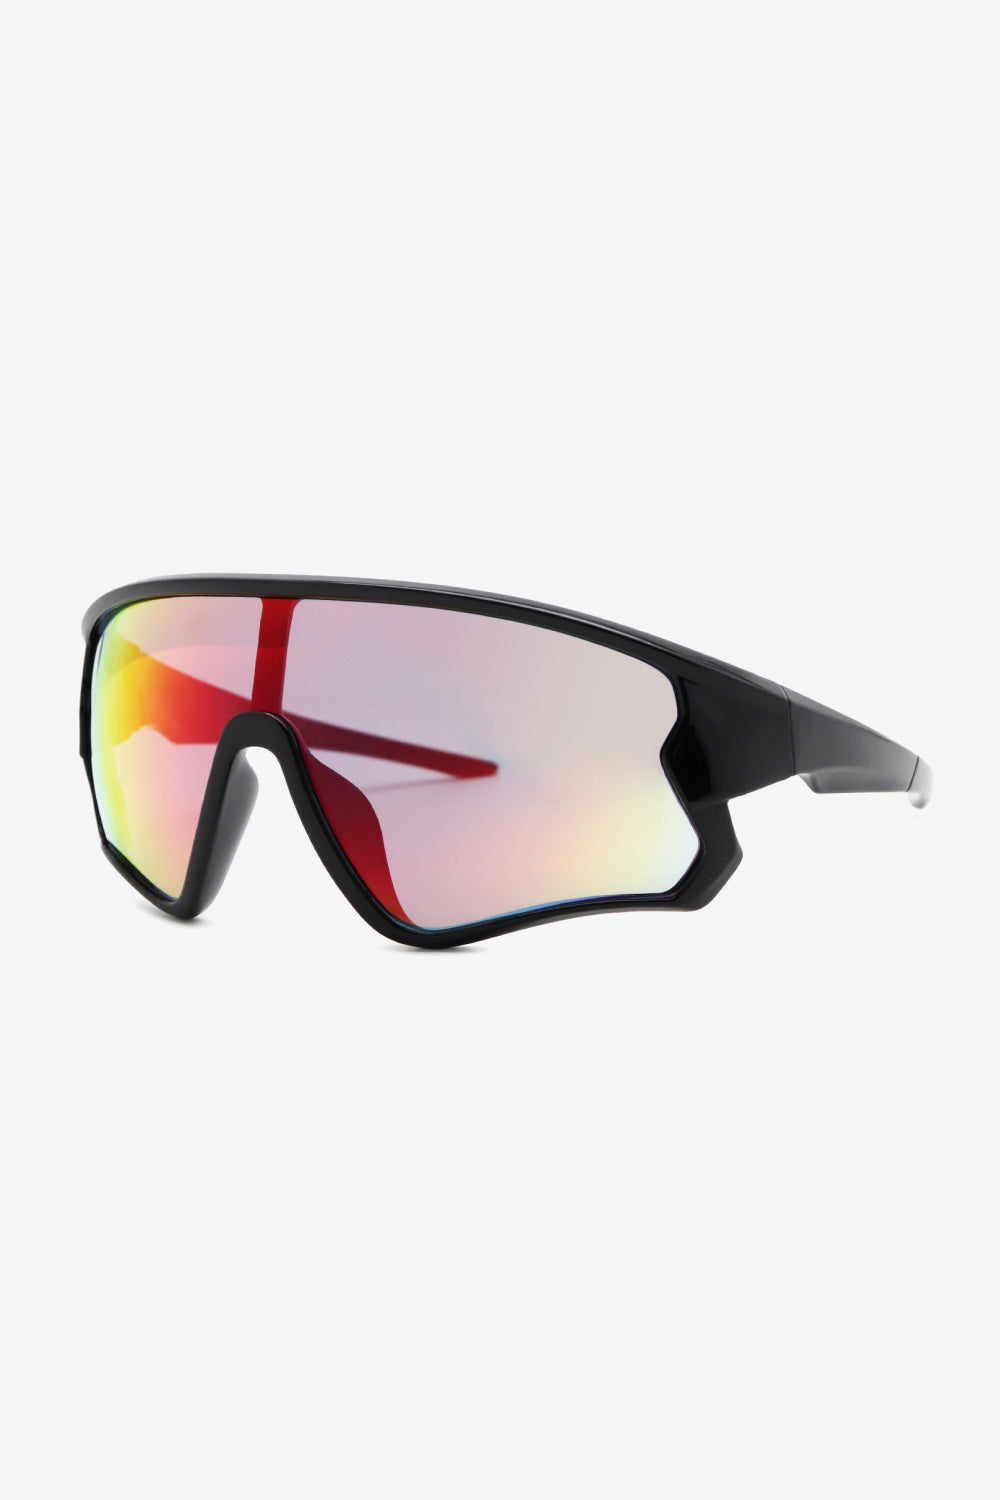 Polycarbonate Shield Sunglasses - Sunglasses - FITGGINS